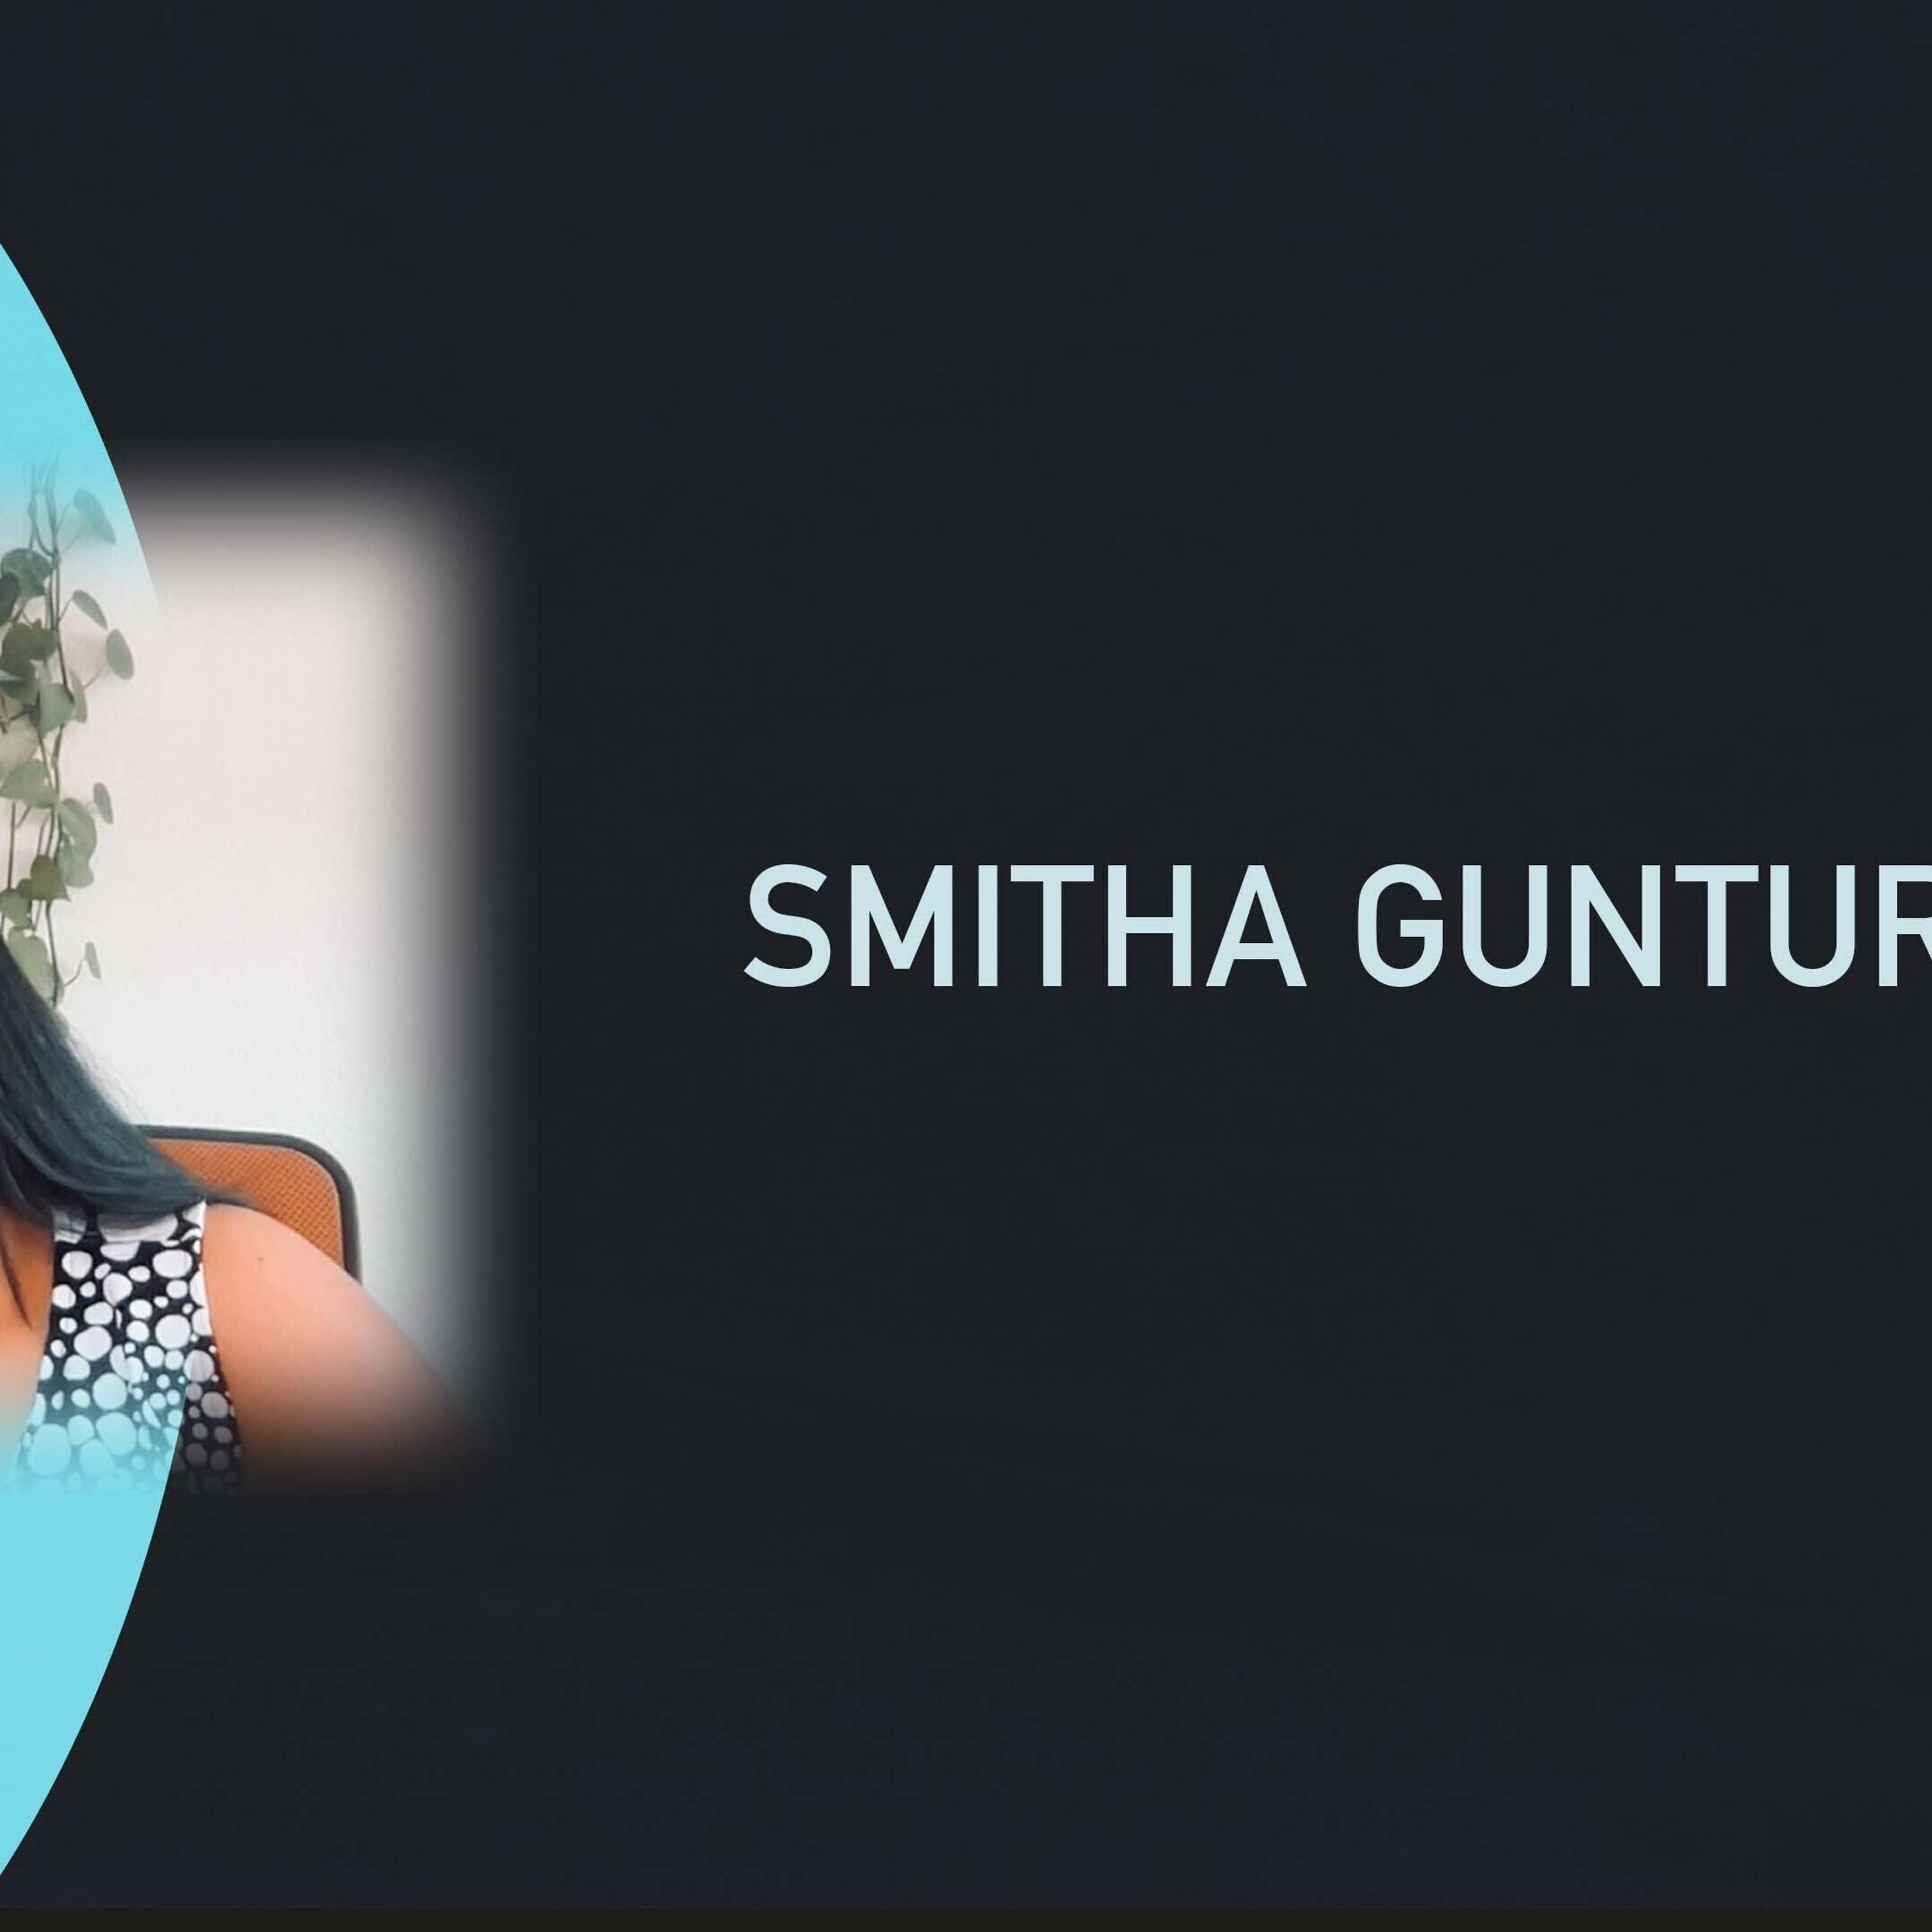 Smitha Gunturi - I'm blessed to celebrate my birthday with you today!